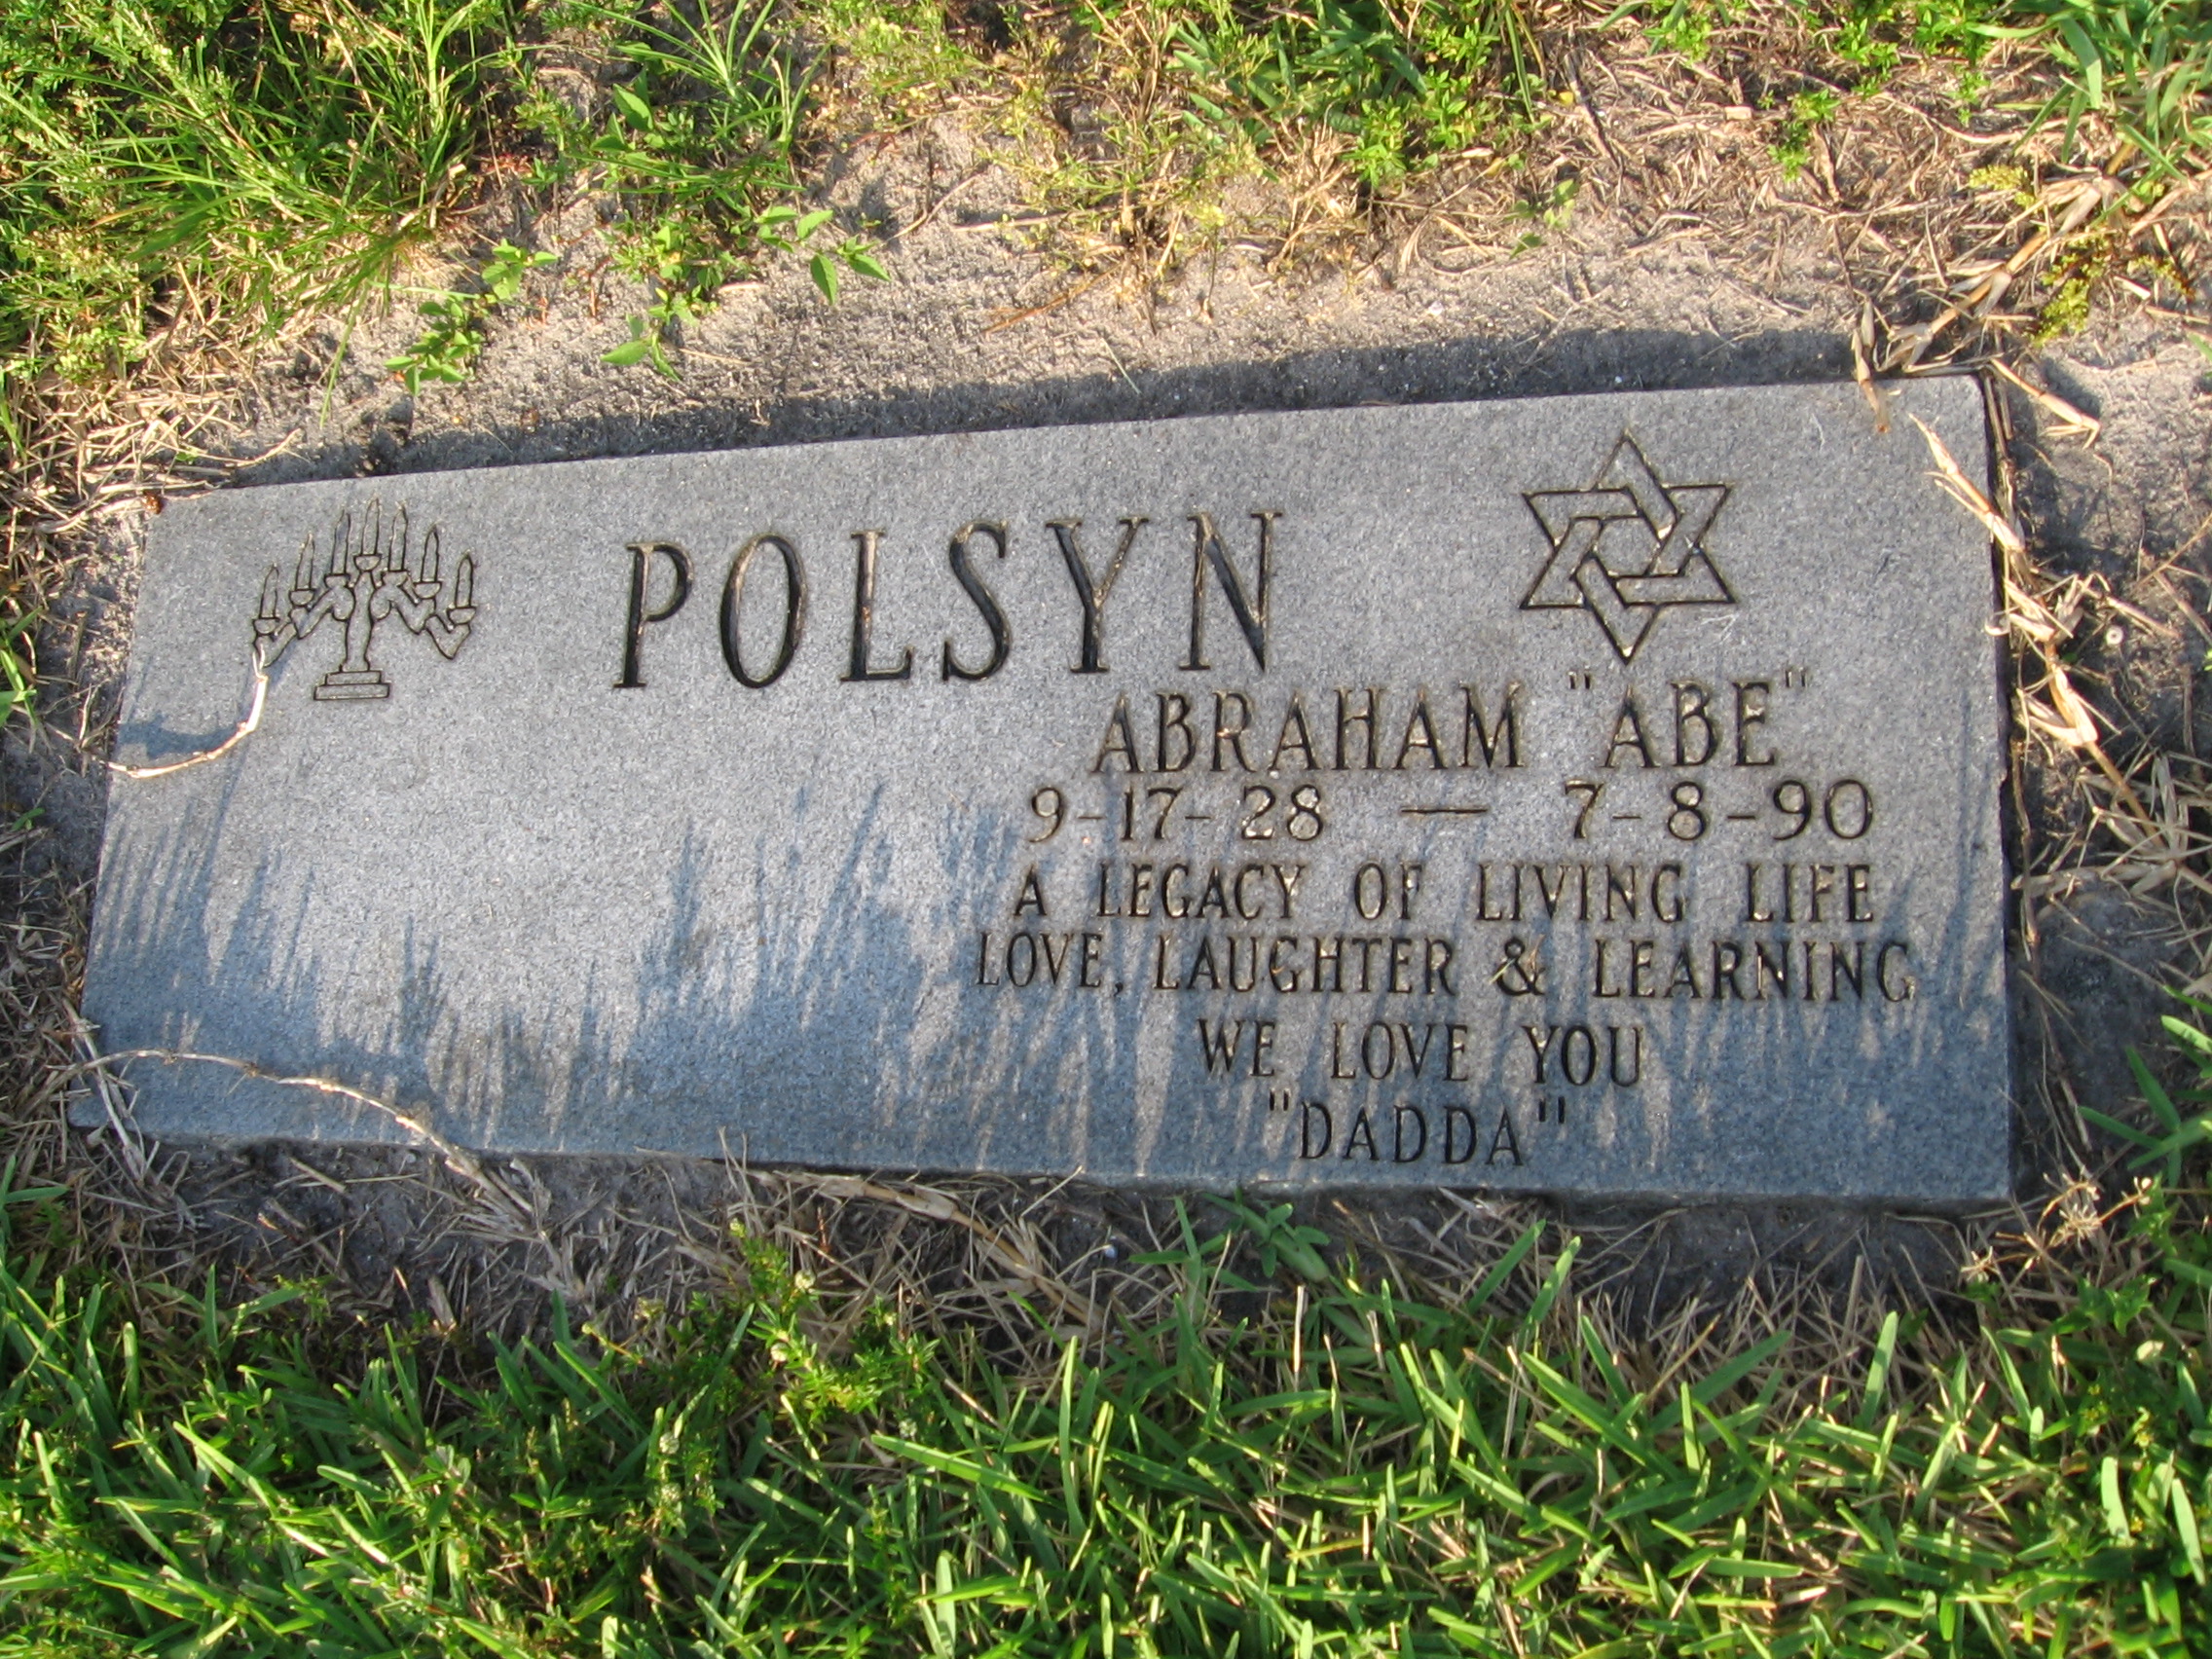 Abraham "Abe" Polsyn